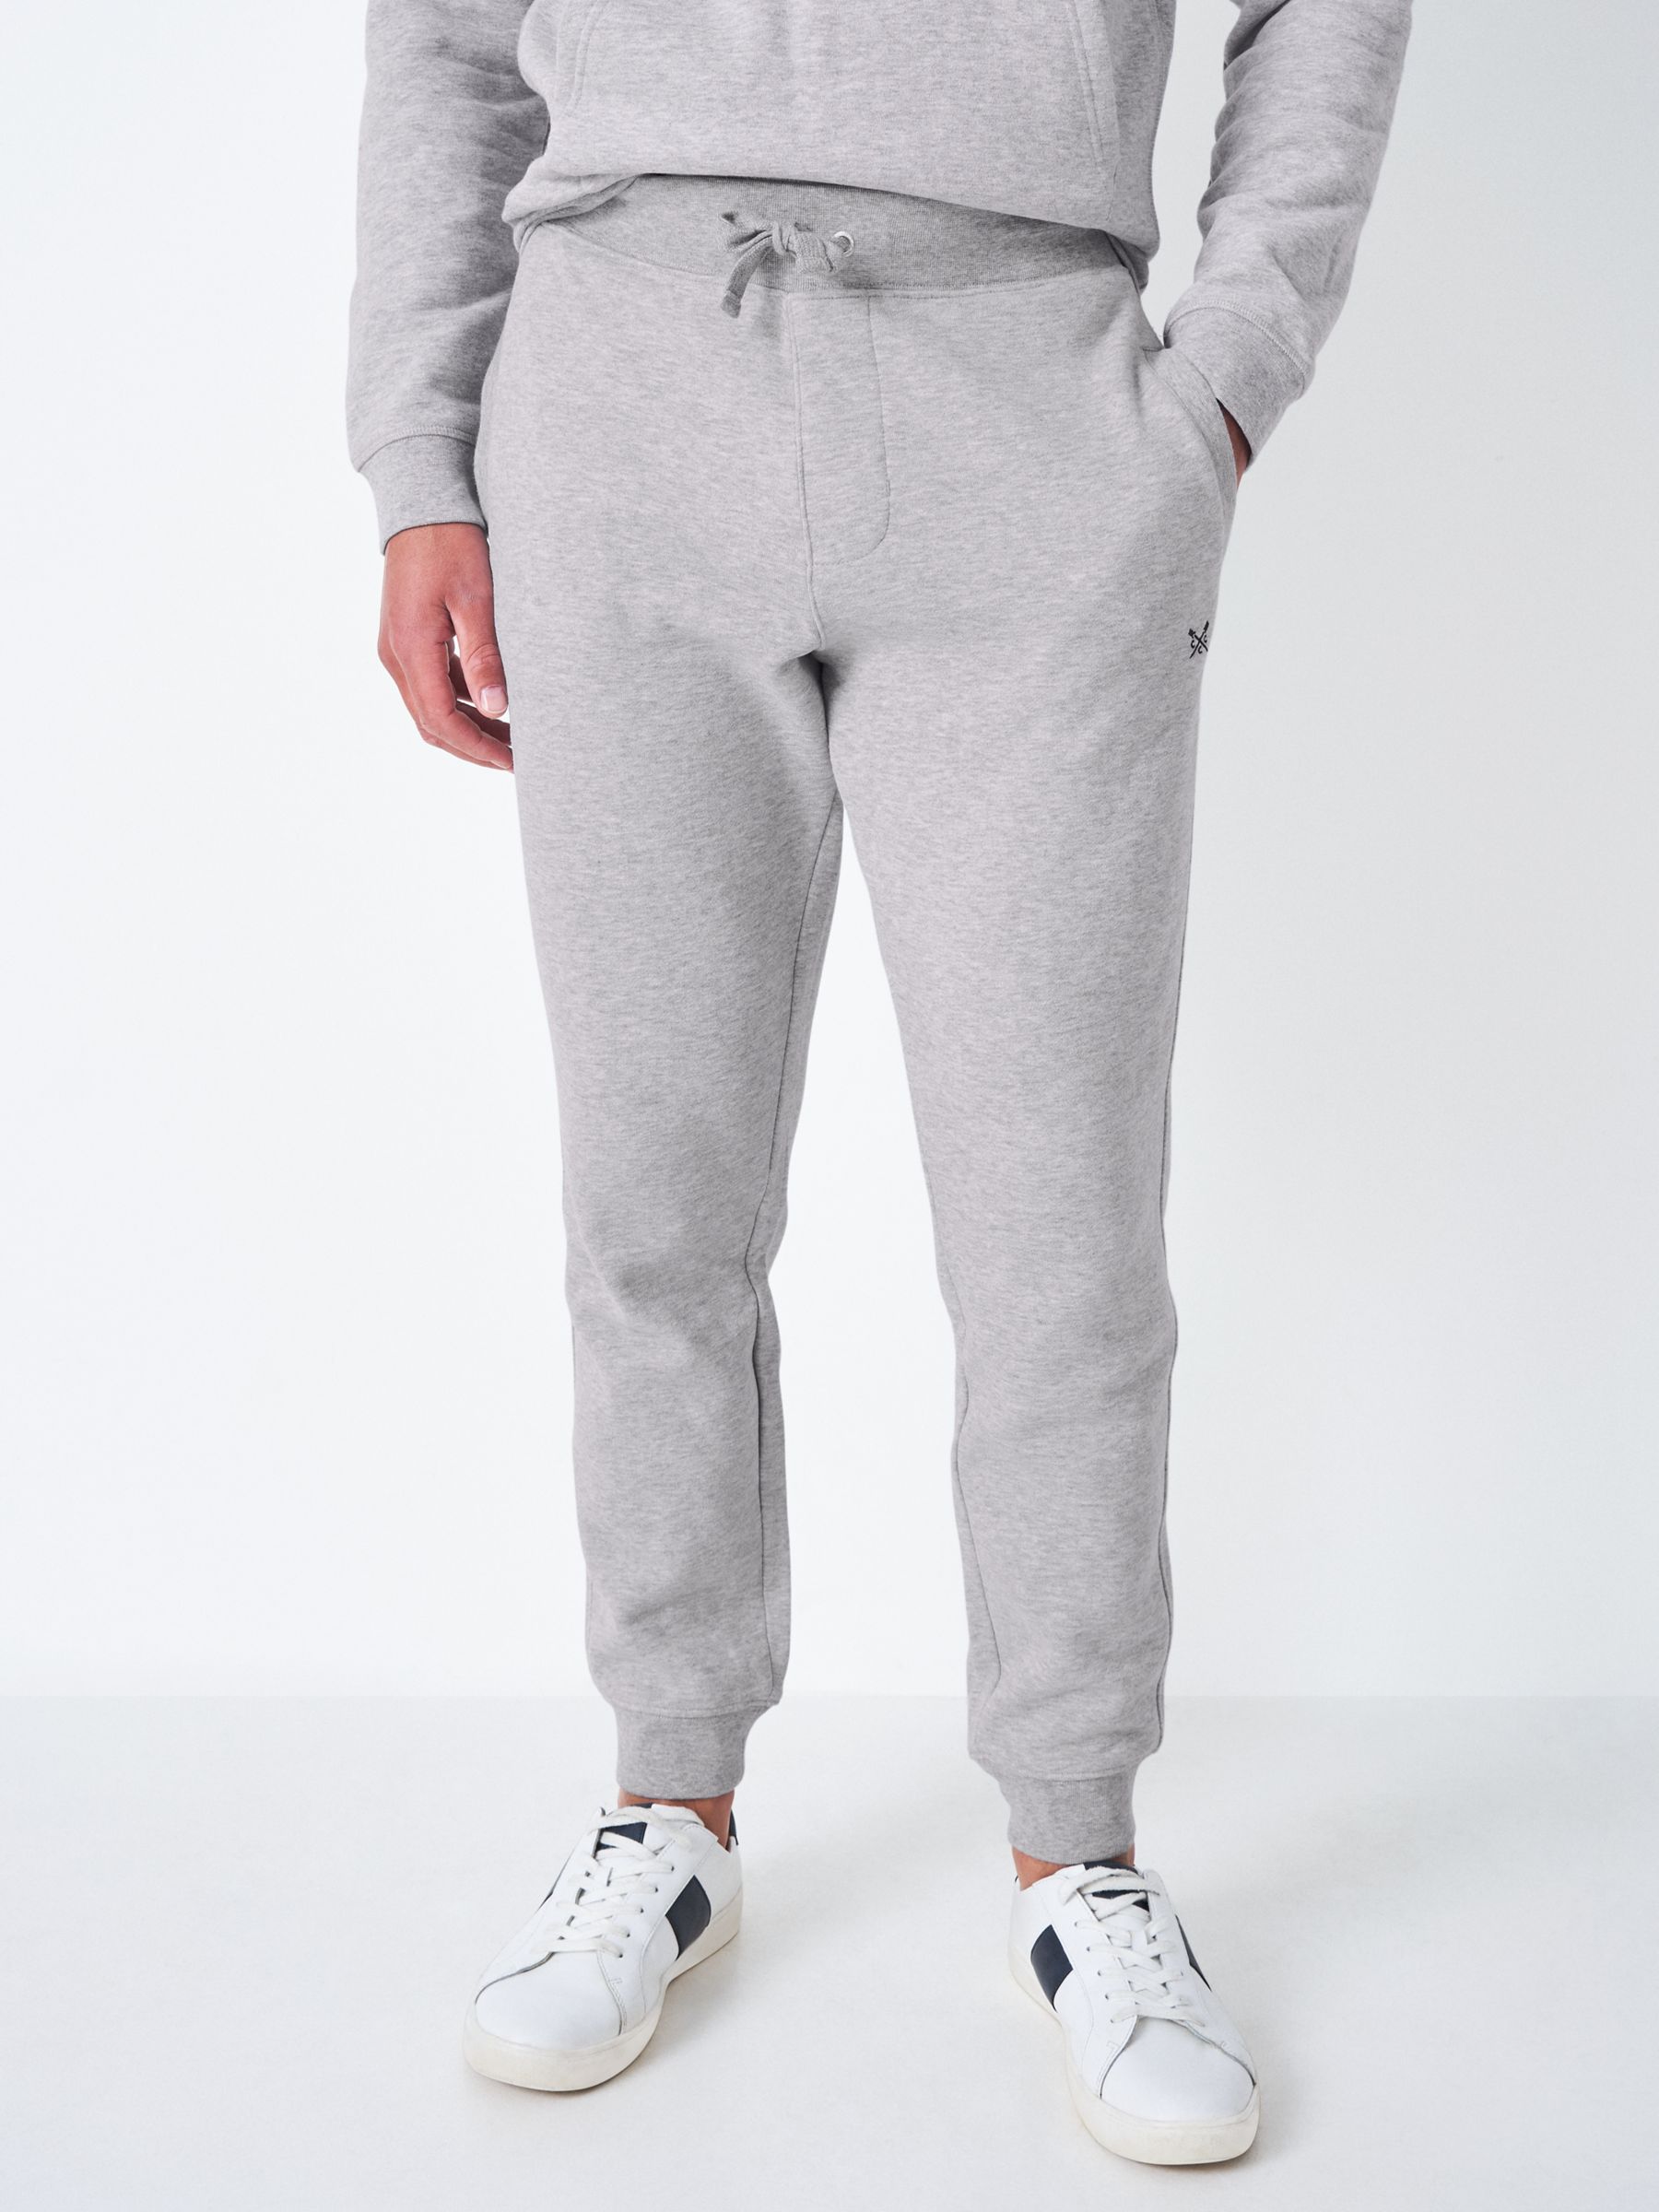 guy wearing thin grey sweatpants｜TikTok Search